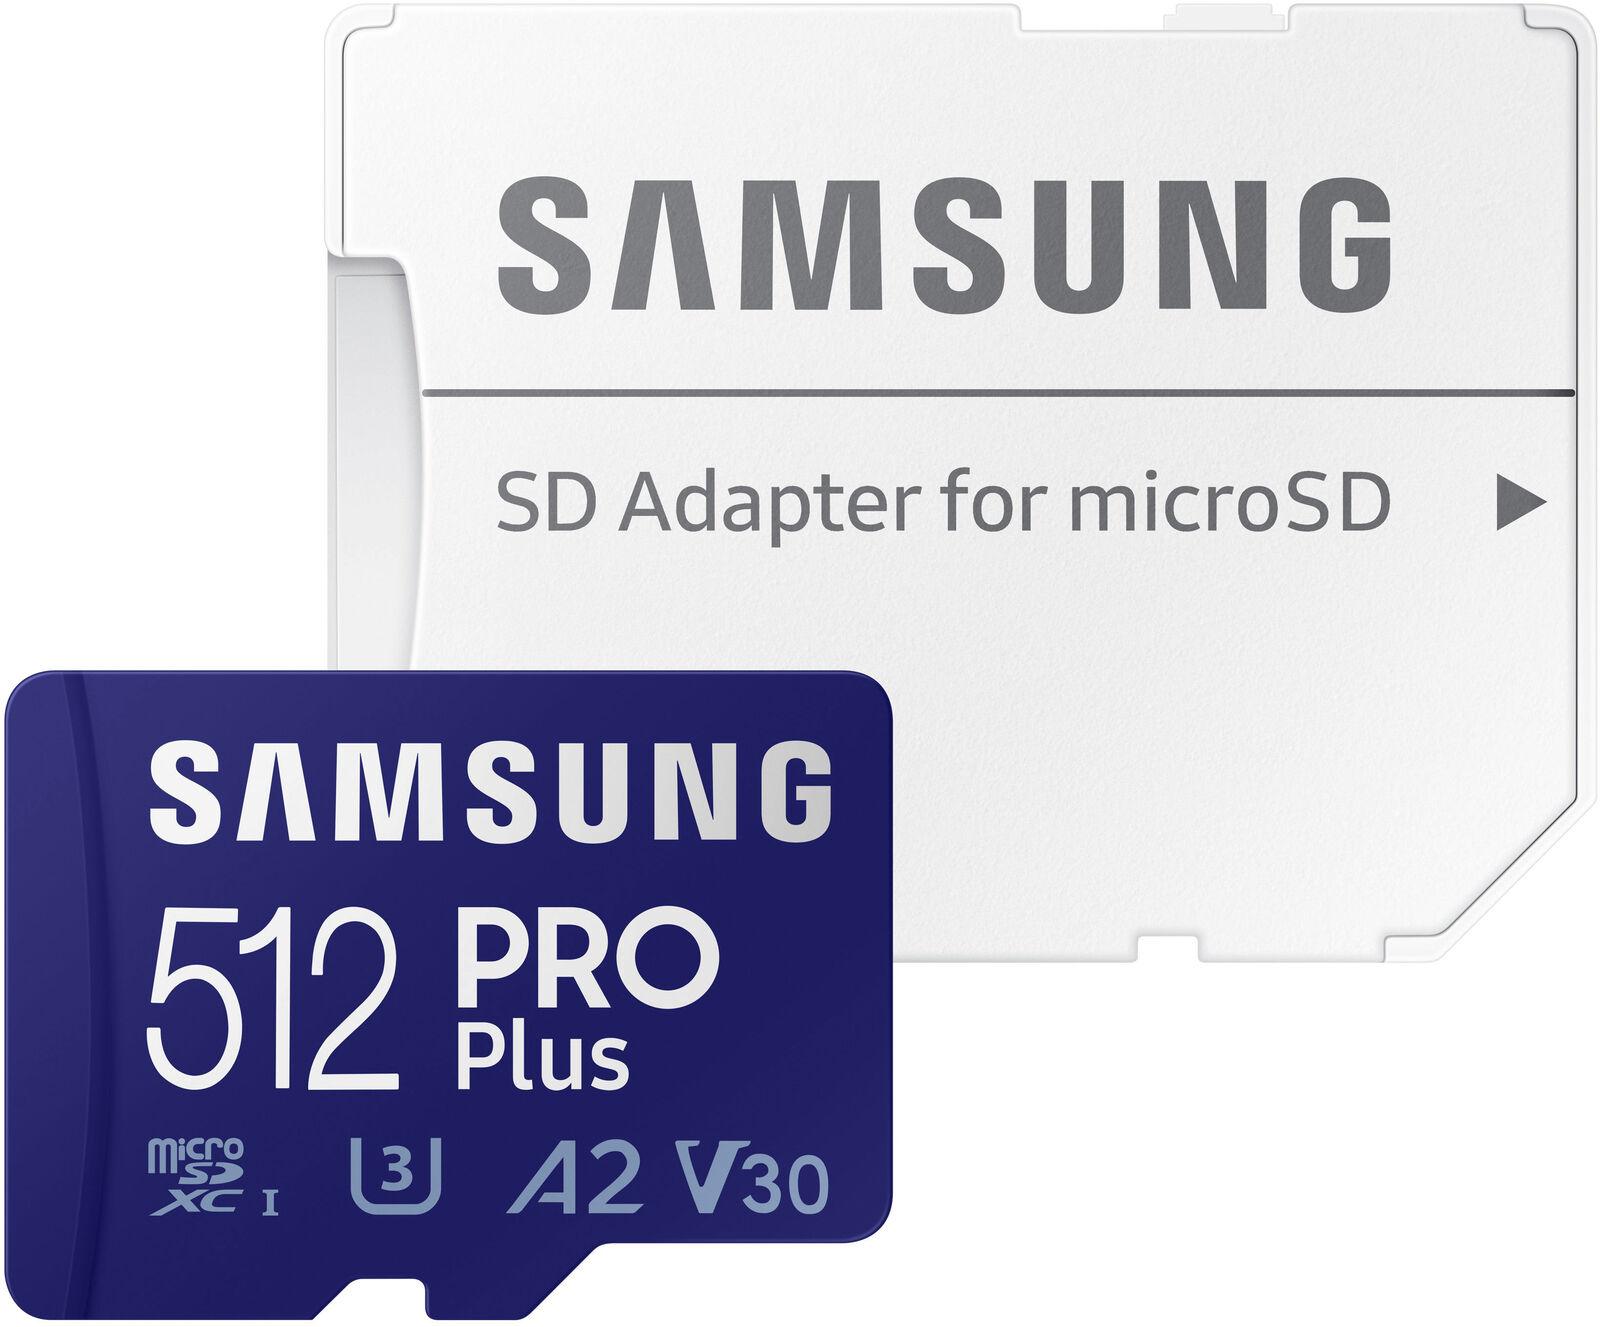 512GB Samsung Pro Plus microSDXC A2 V30 Memory Card for $69.99 Shipped